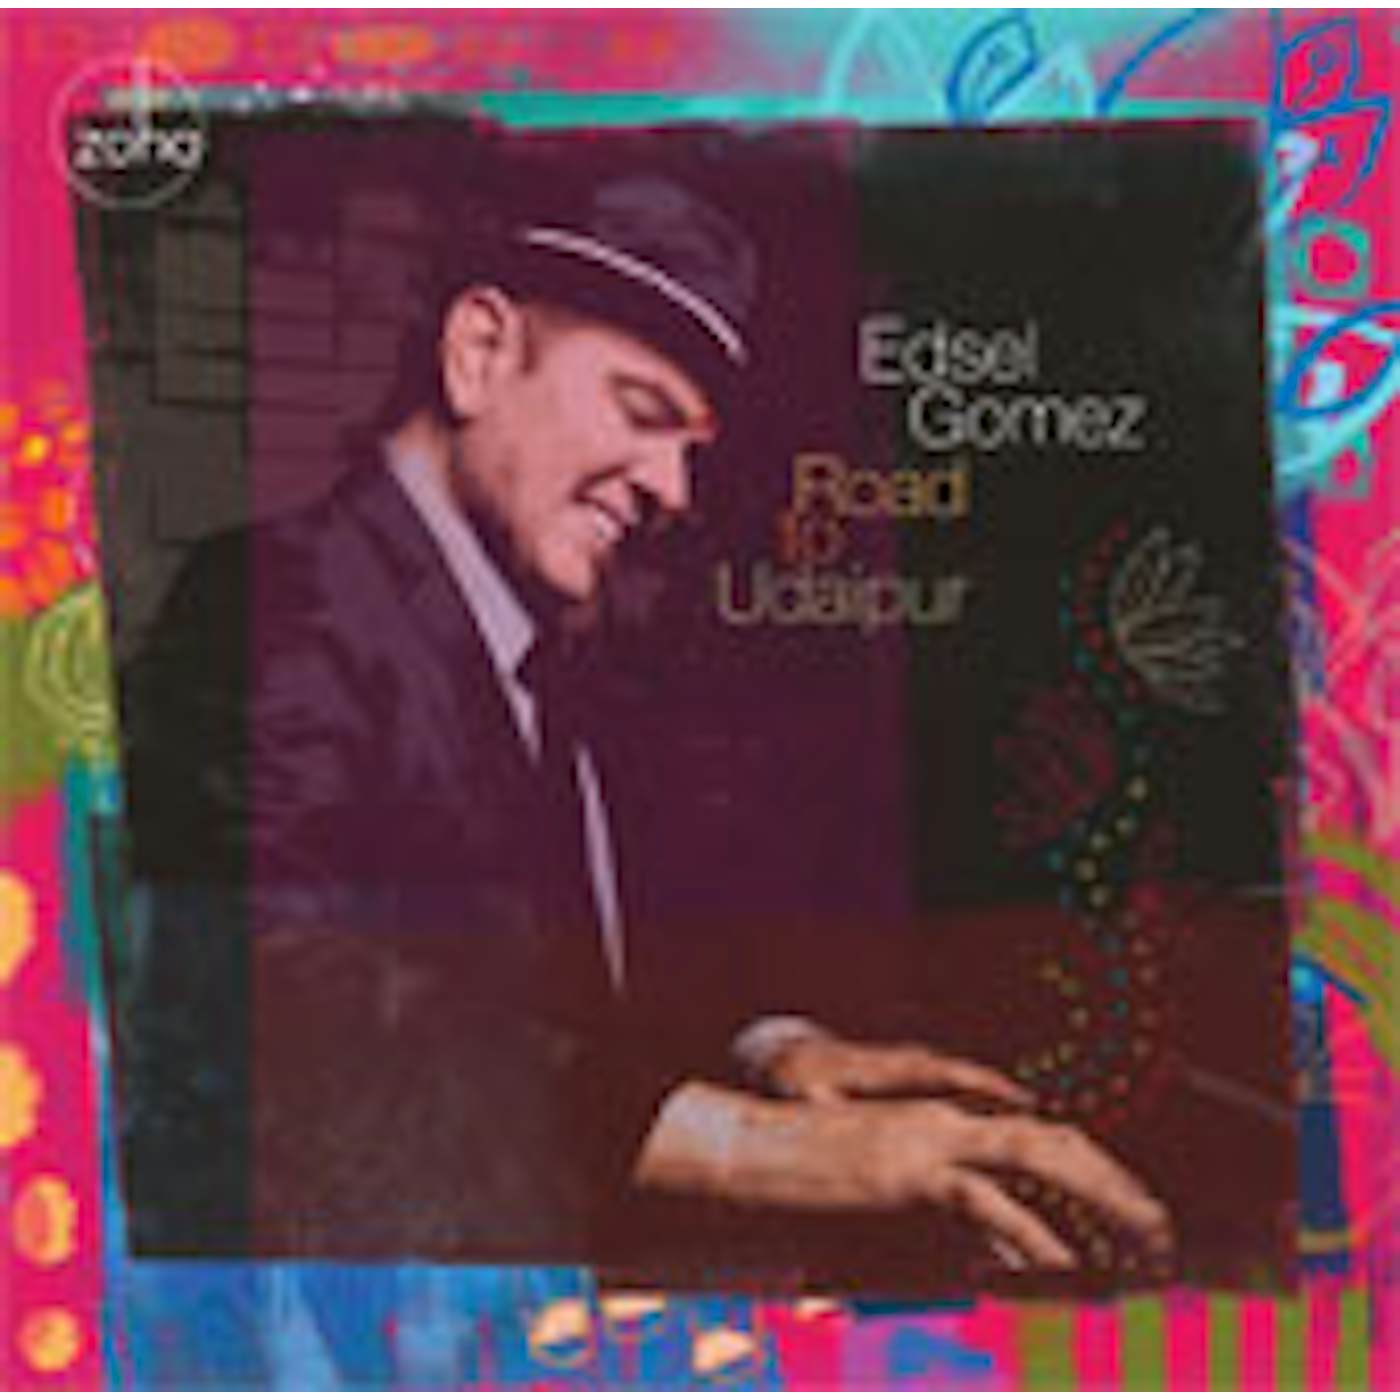 Edsel Gomez ROAD TO UDAIPUR CD